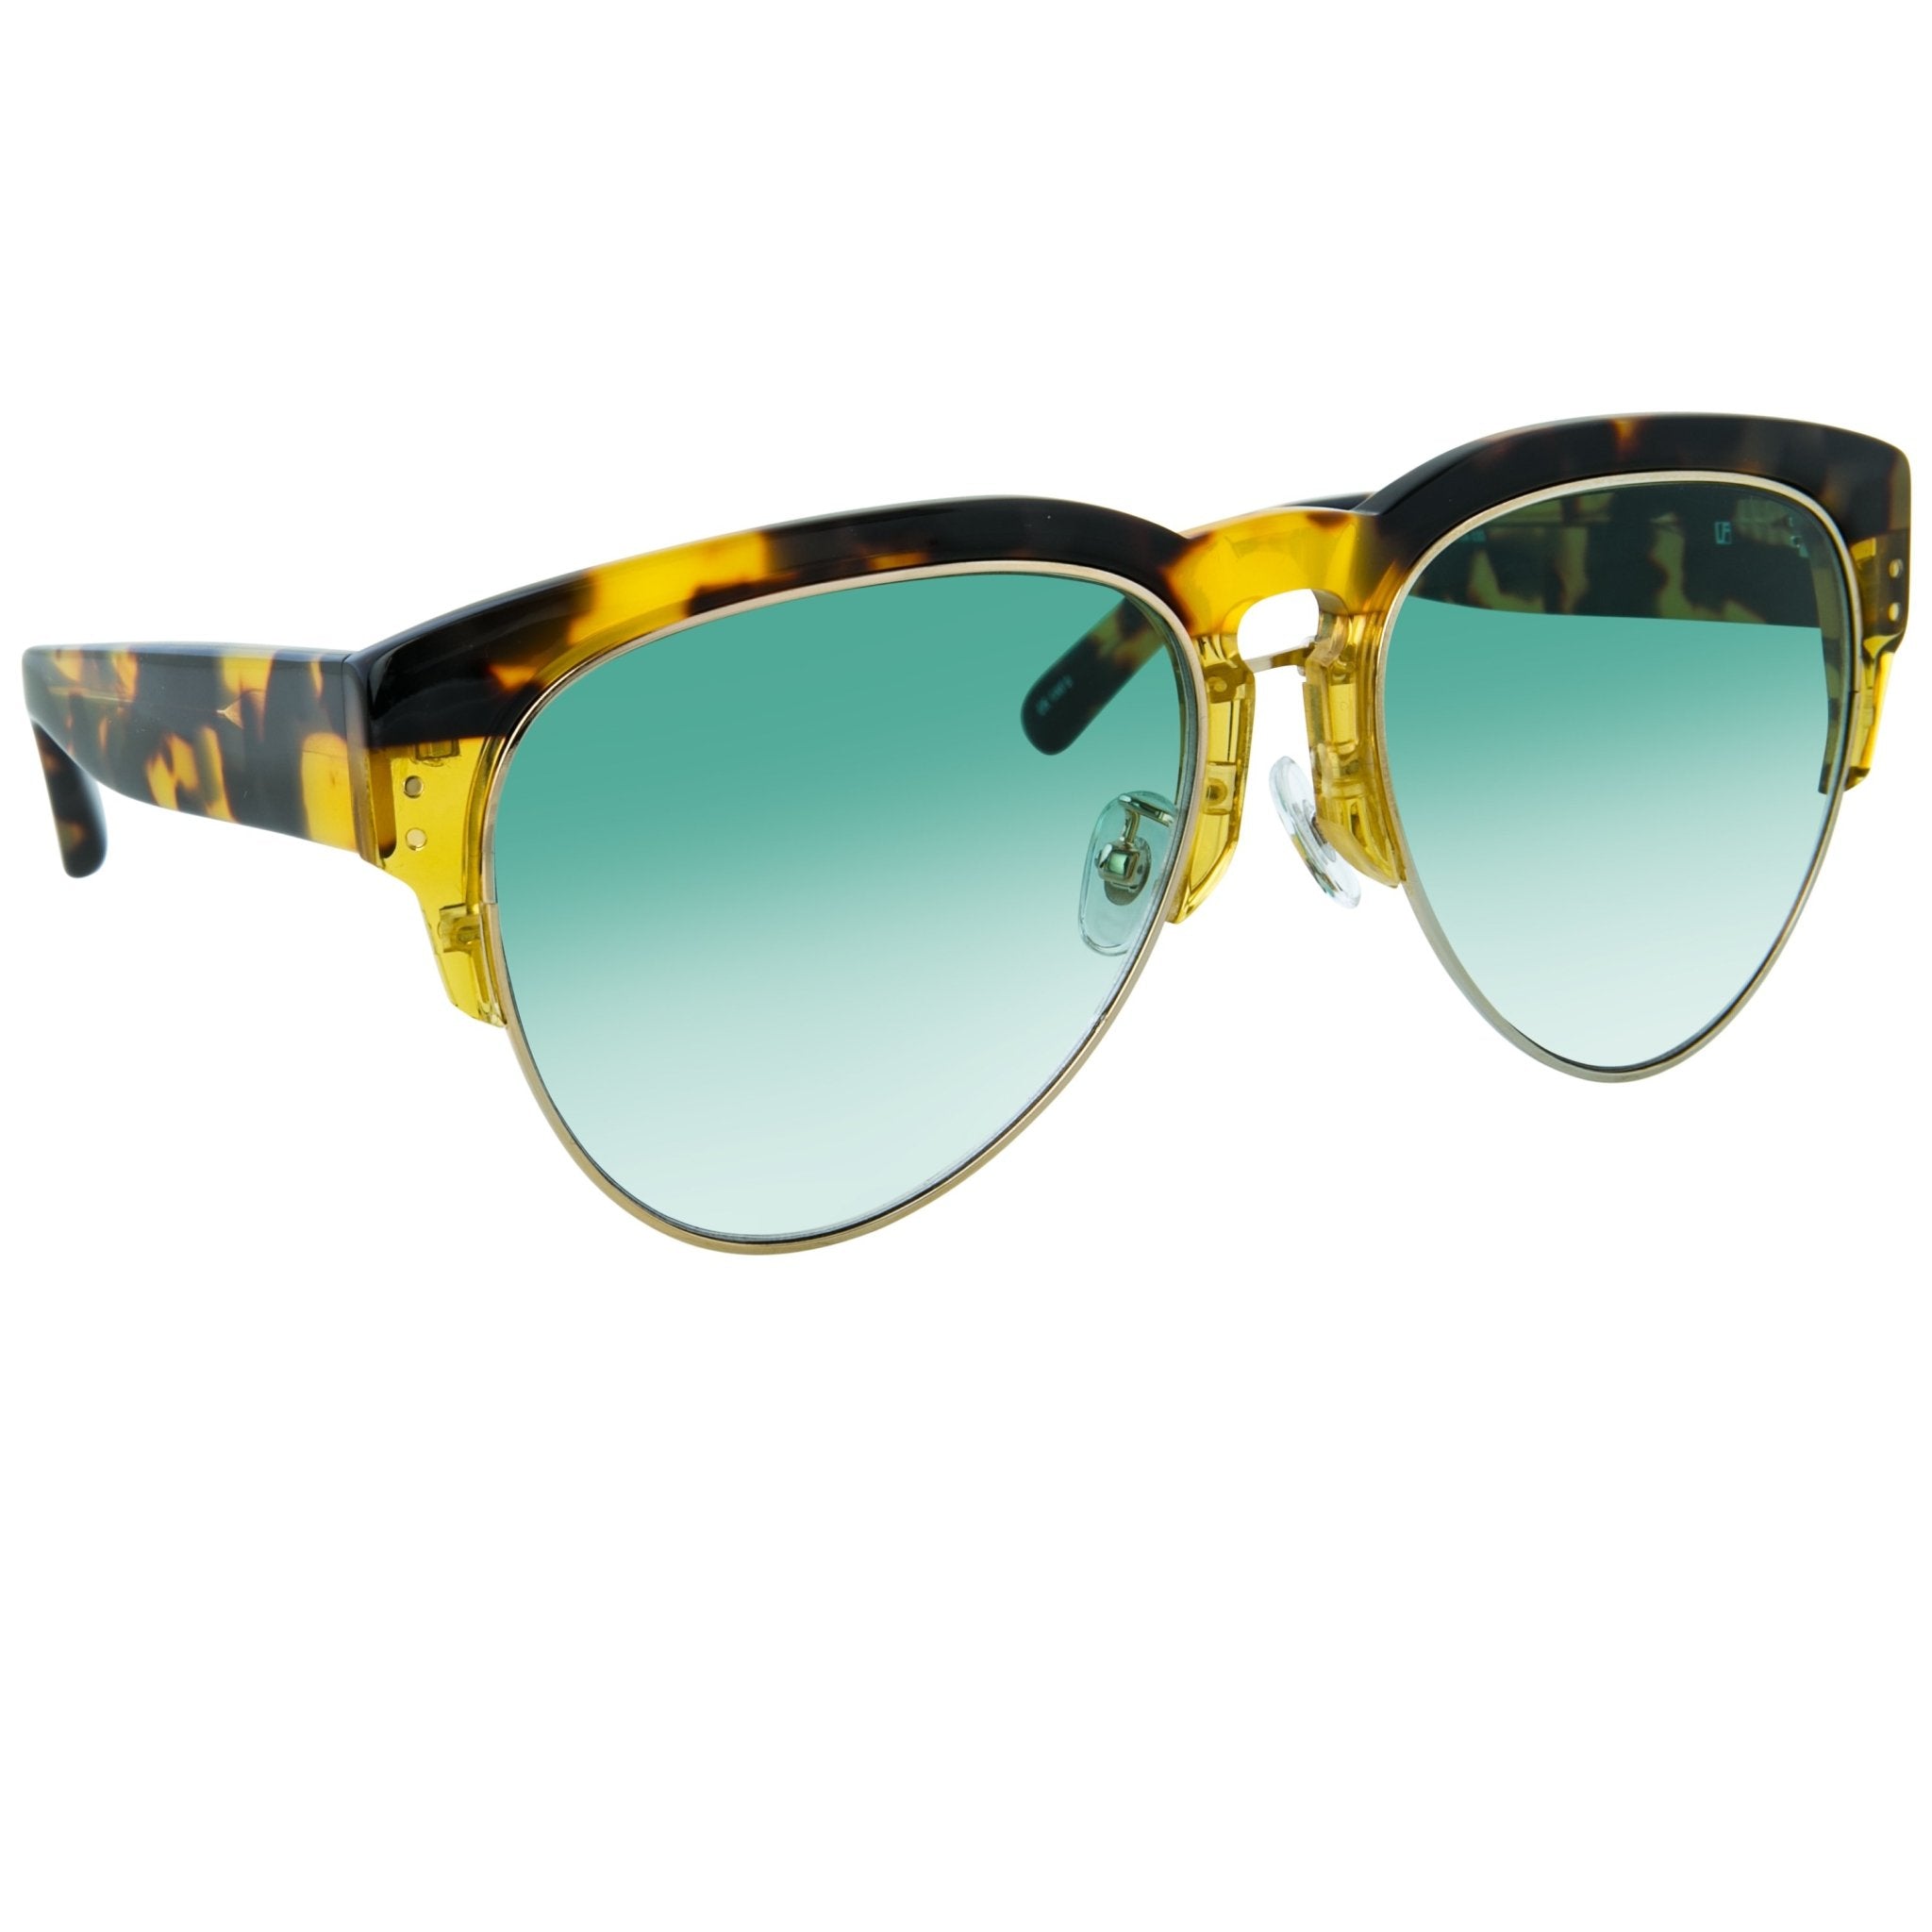 Erdem Women Sunglasses Tortoise Shell Light Gold with Green Graduated Lenses EDM25C2SUN - Watches & Crystals